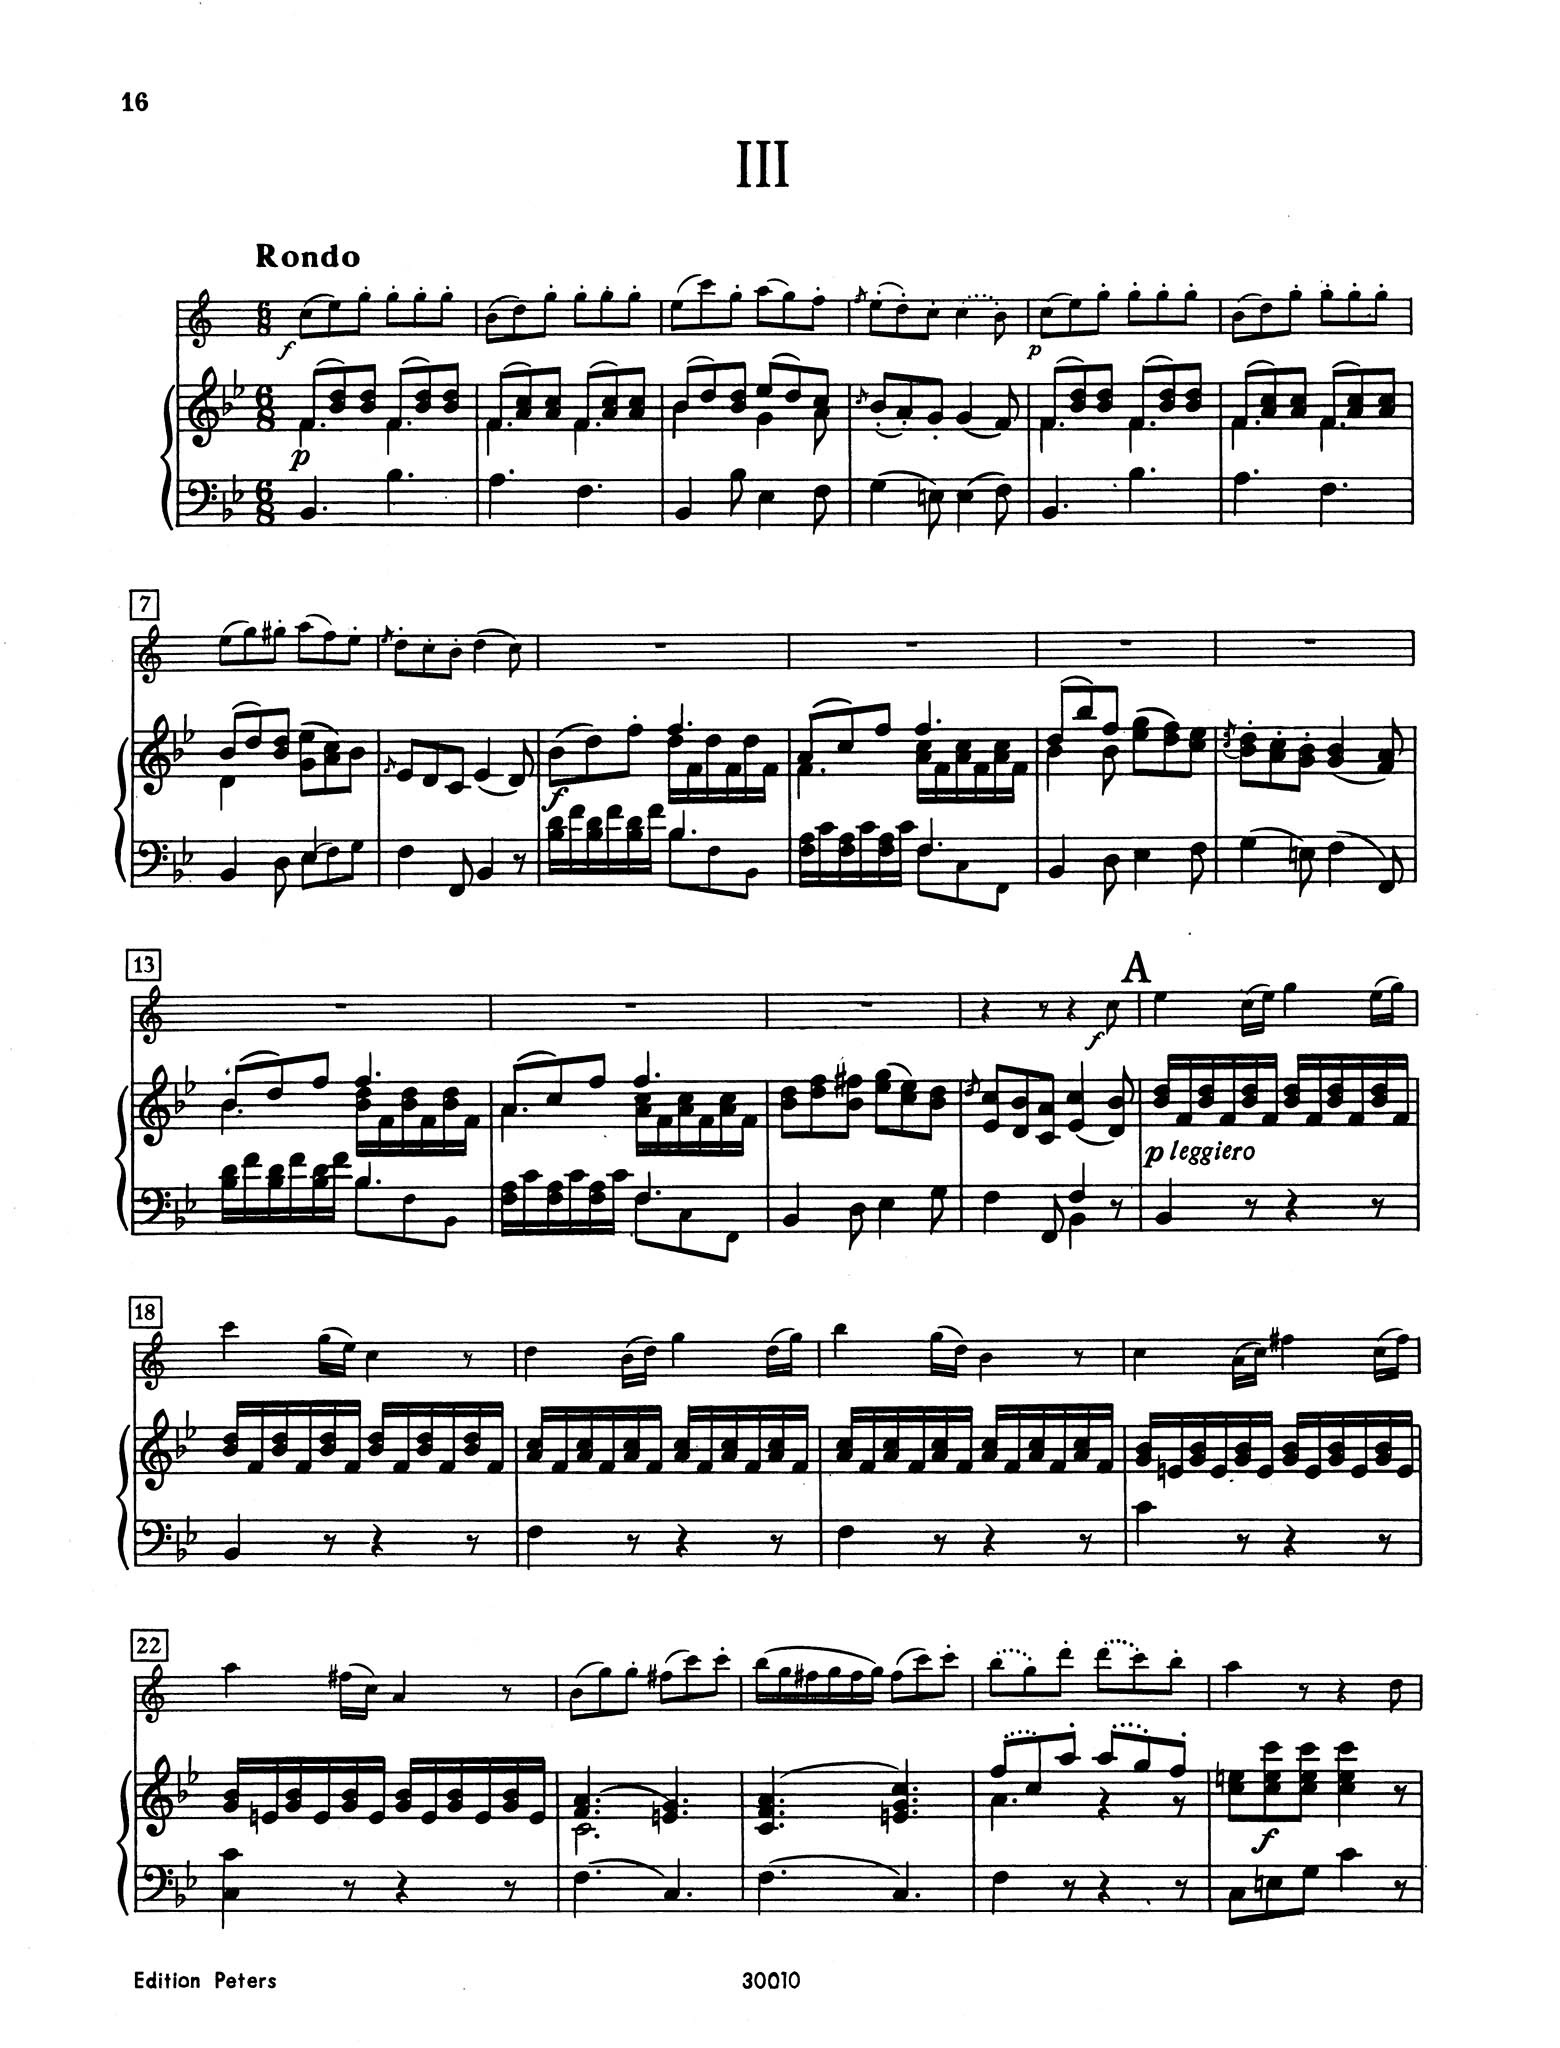 Clarinet Concerto No. 7 (Kaiser) in B-flat Major - Movement 3